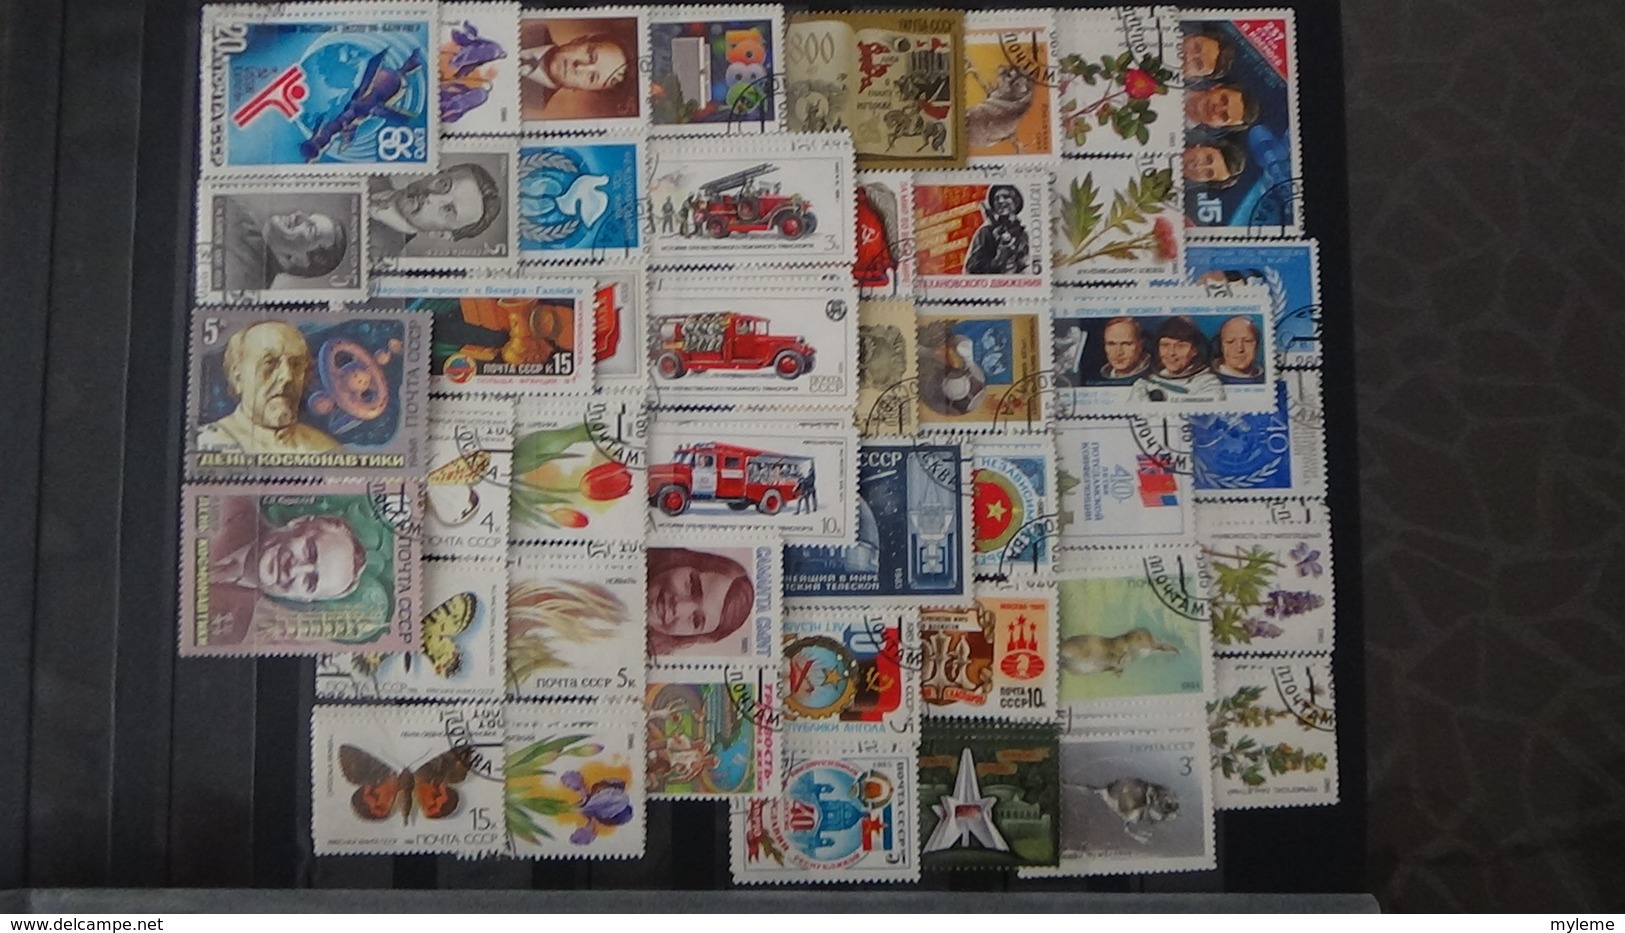 Collection de timbres et blocs de RUSSIE. A saisir !!!